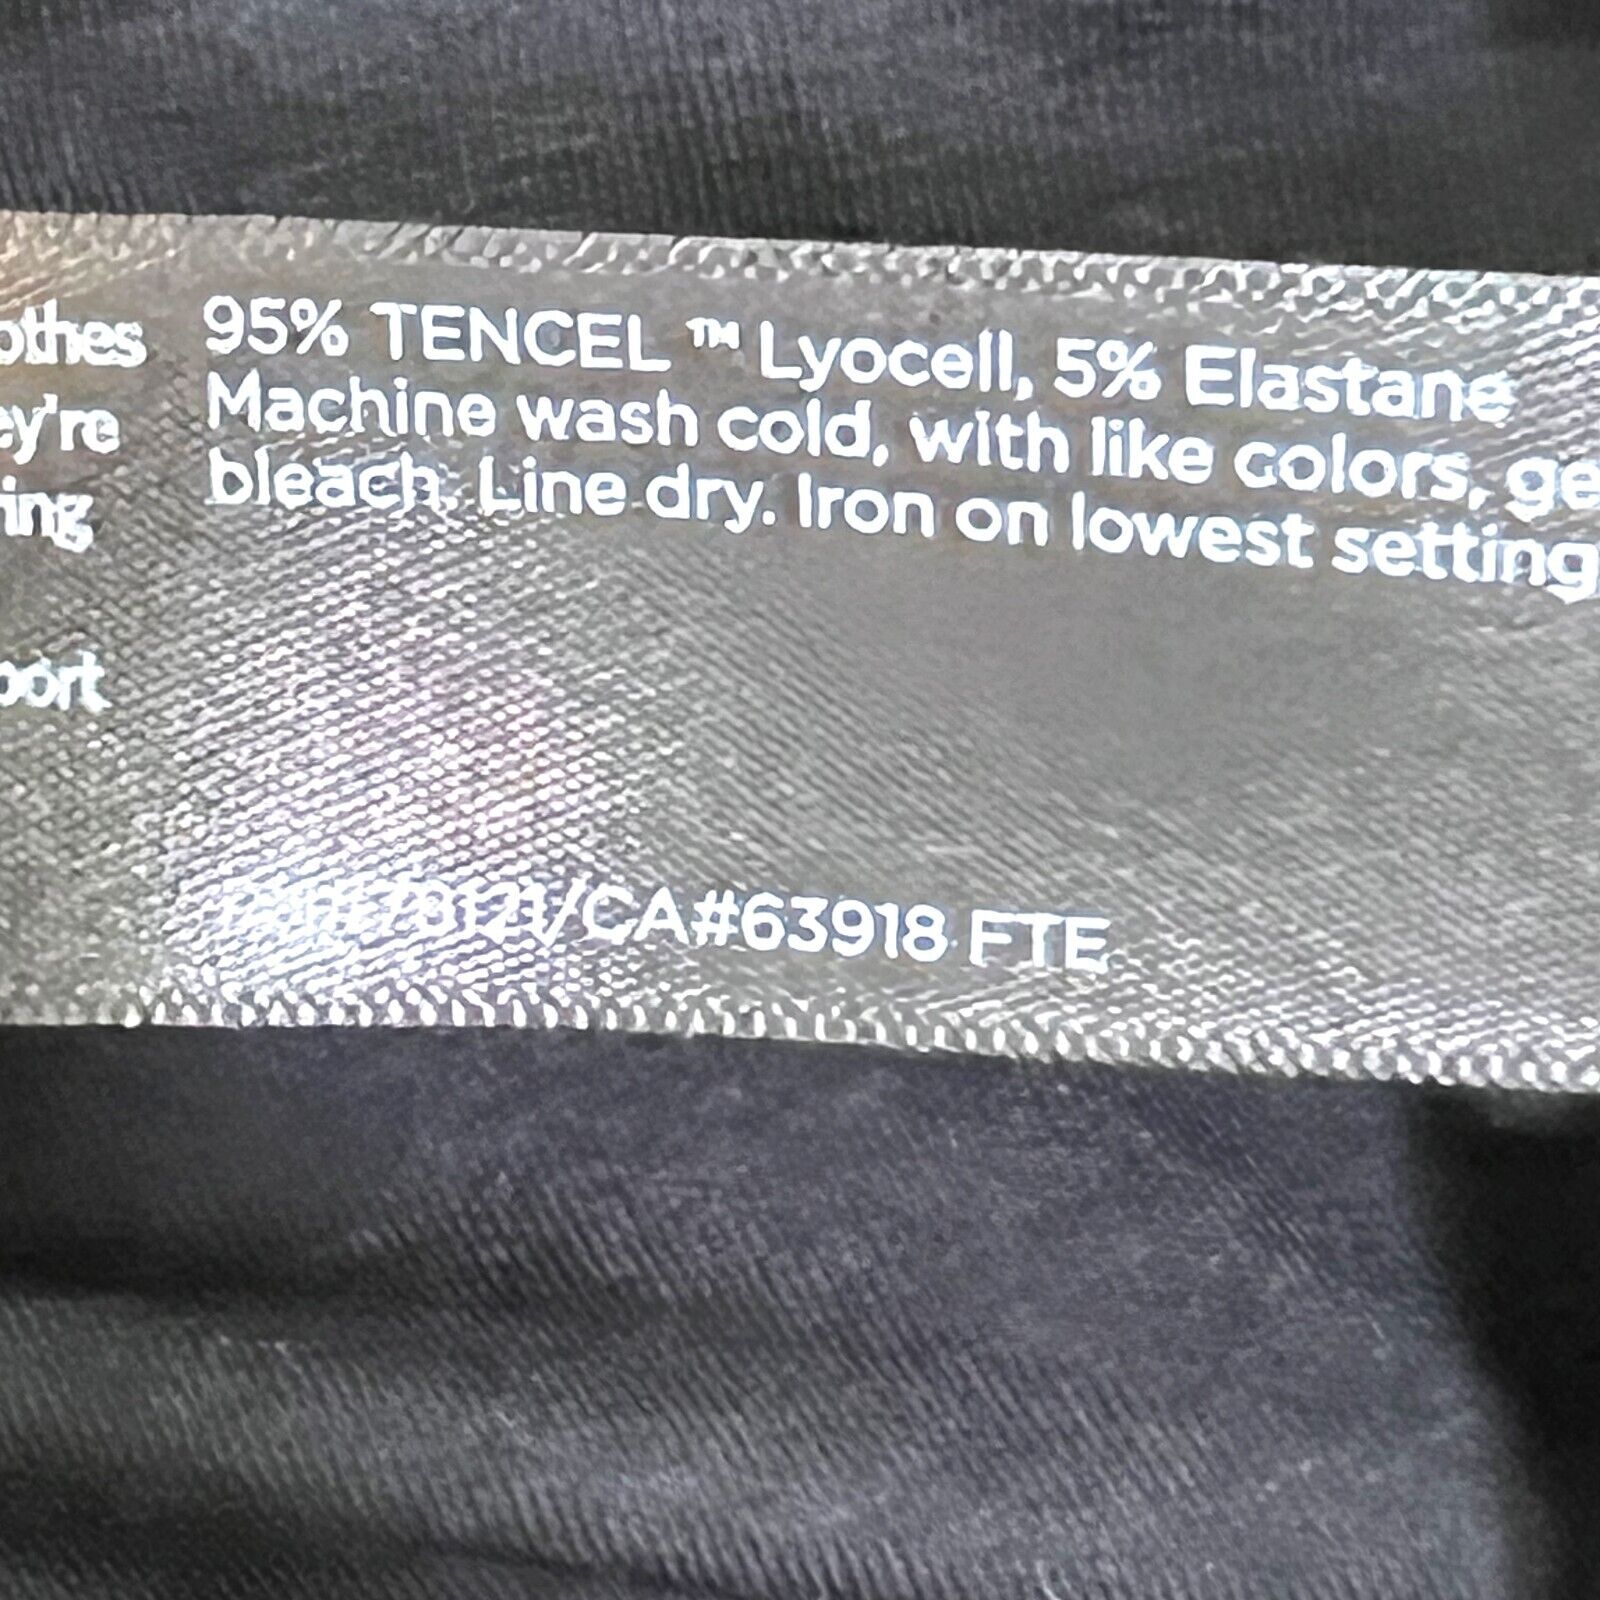 Eileen Fisher Black Tiered Tencel / Lycra Skirt NWOT Small